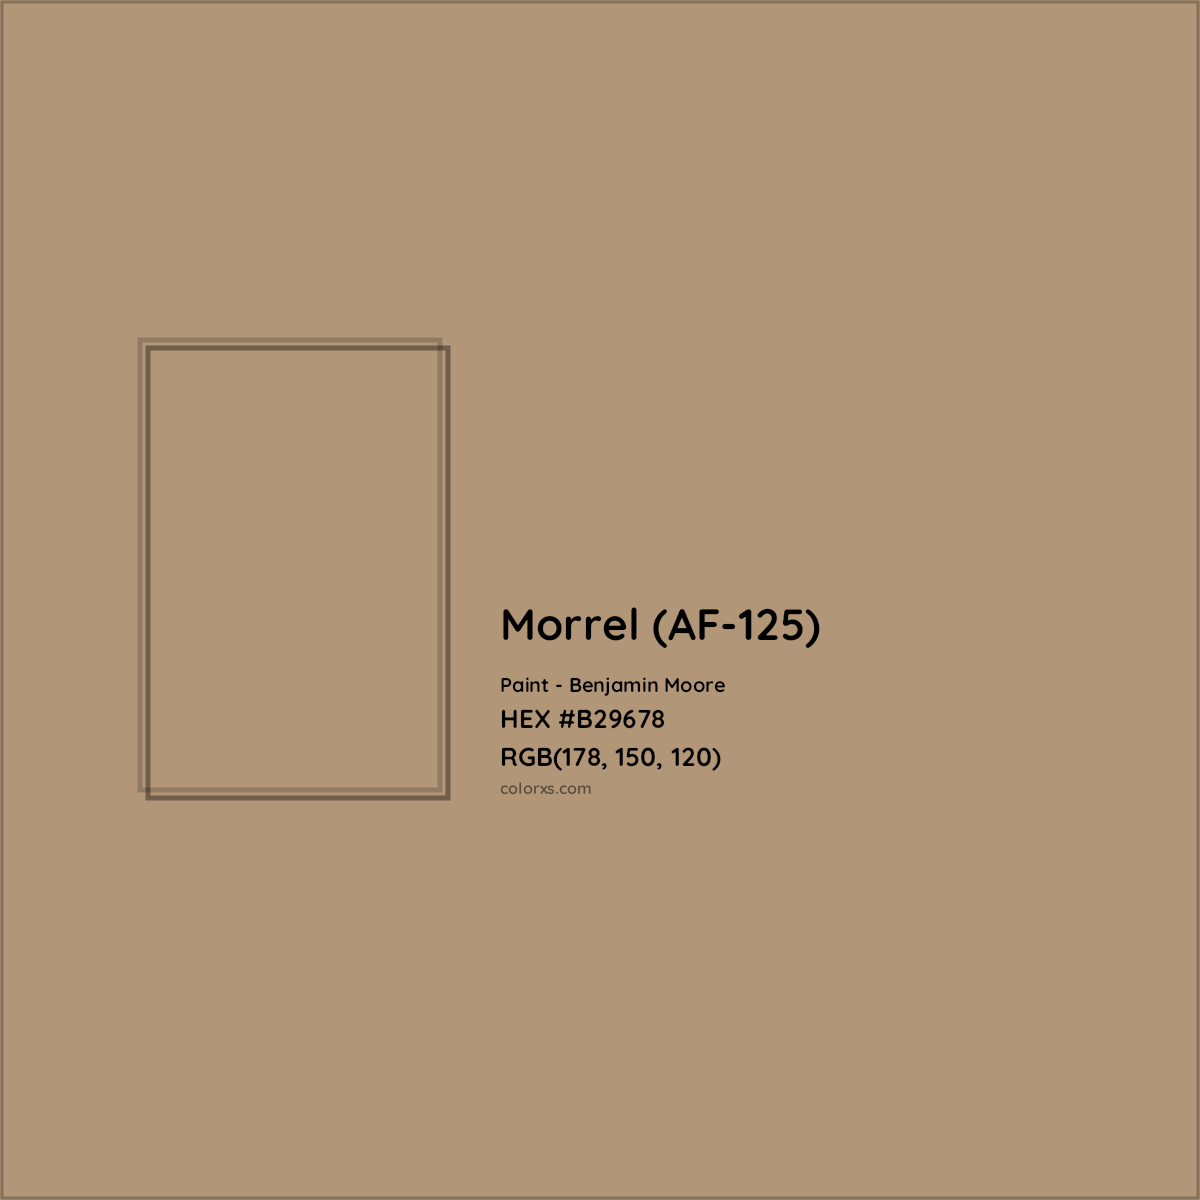 HEX #B29678 Morrel (AF-125) Paint Benjamin Moore - Color Code